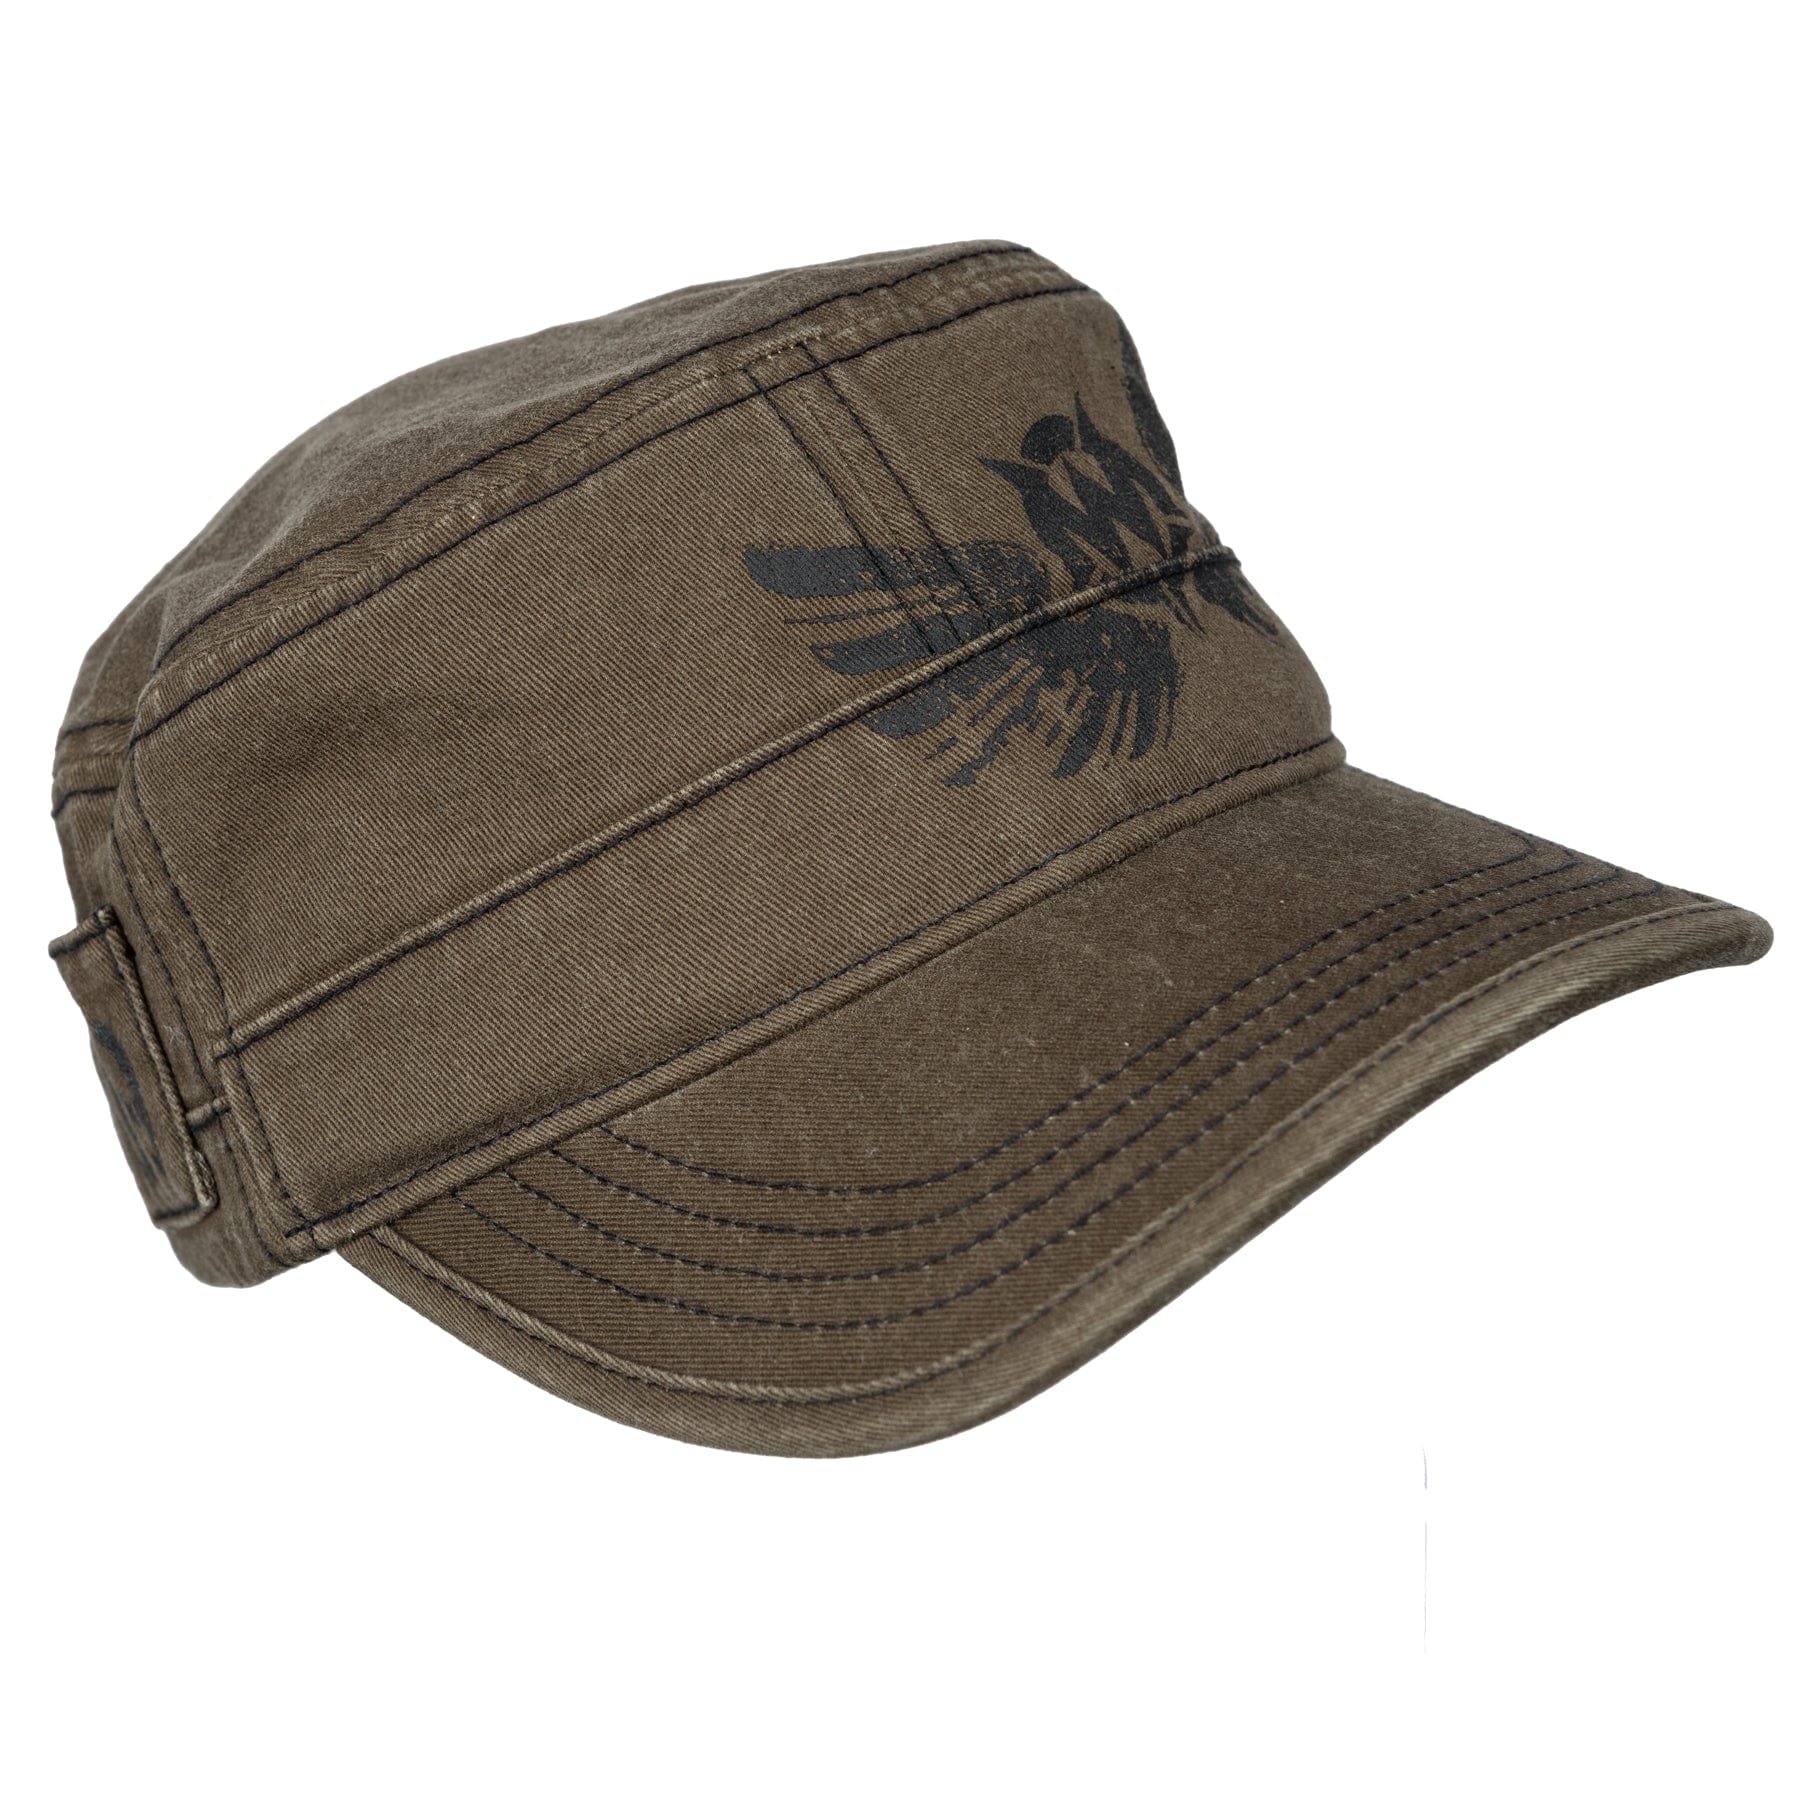 Wornstar Clothing Hat Ranger Cadet Hat